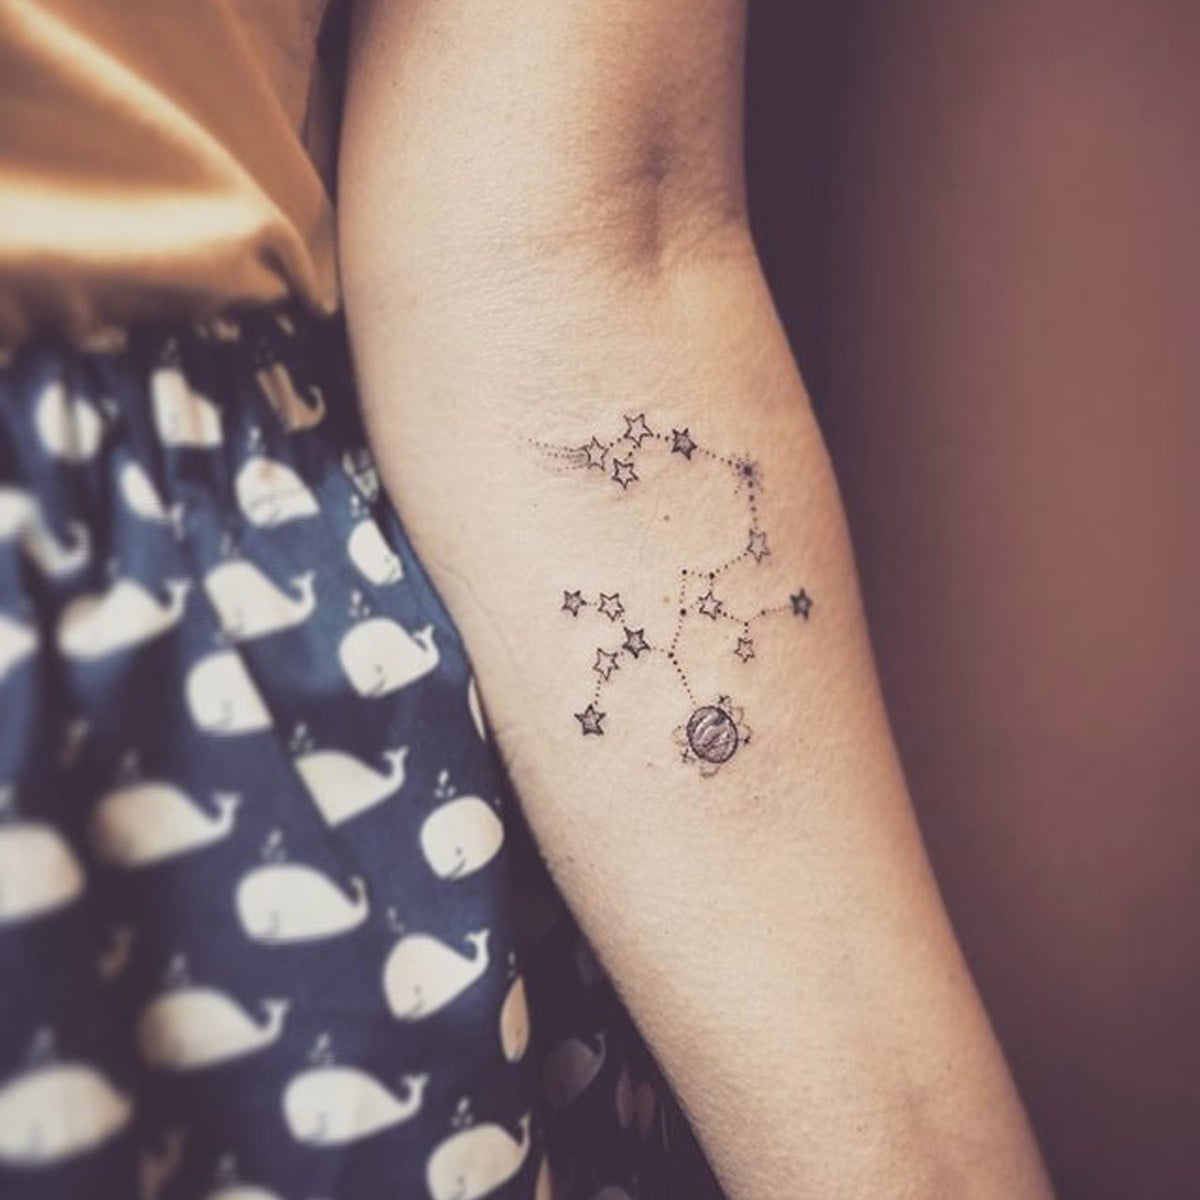 15 Cute tattoo ideas: The ultimate Instagram inkspiration